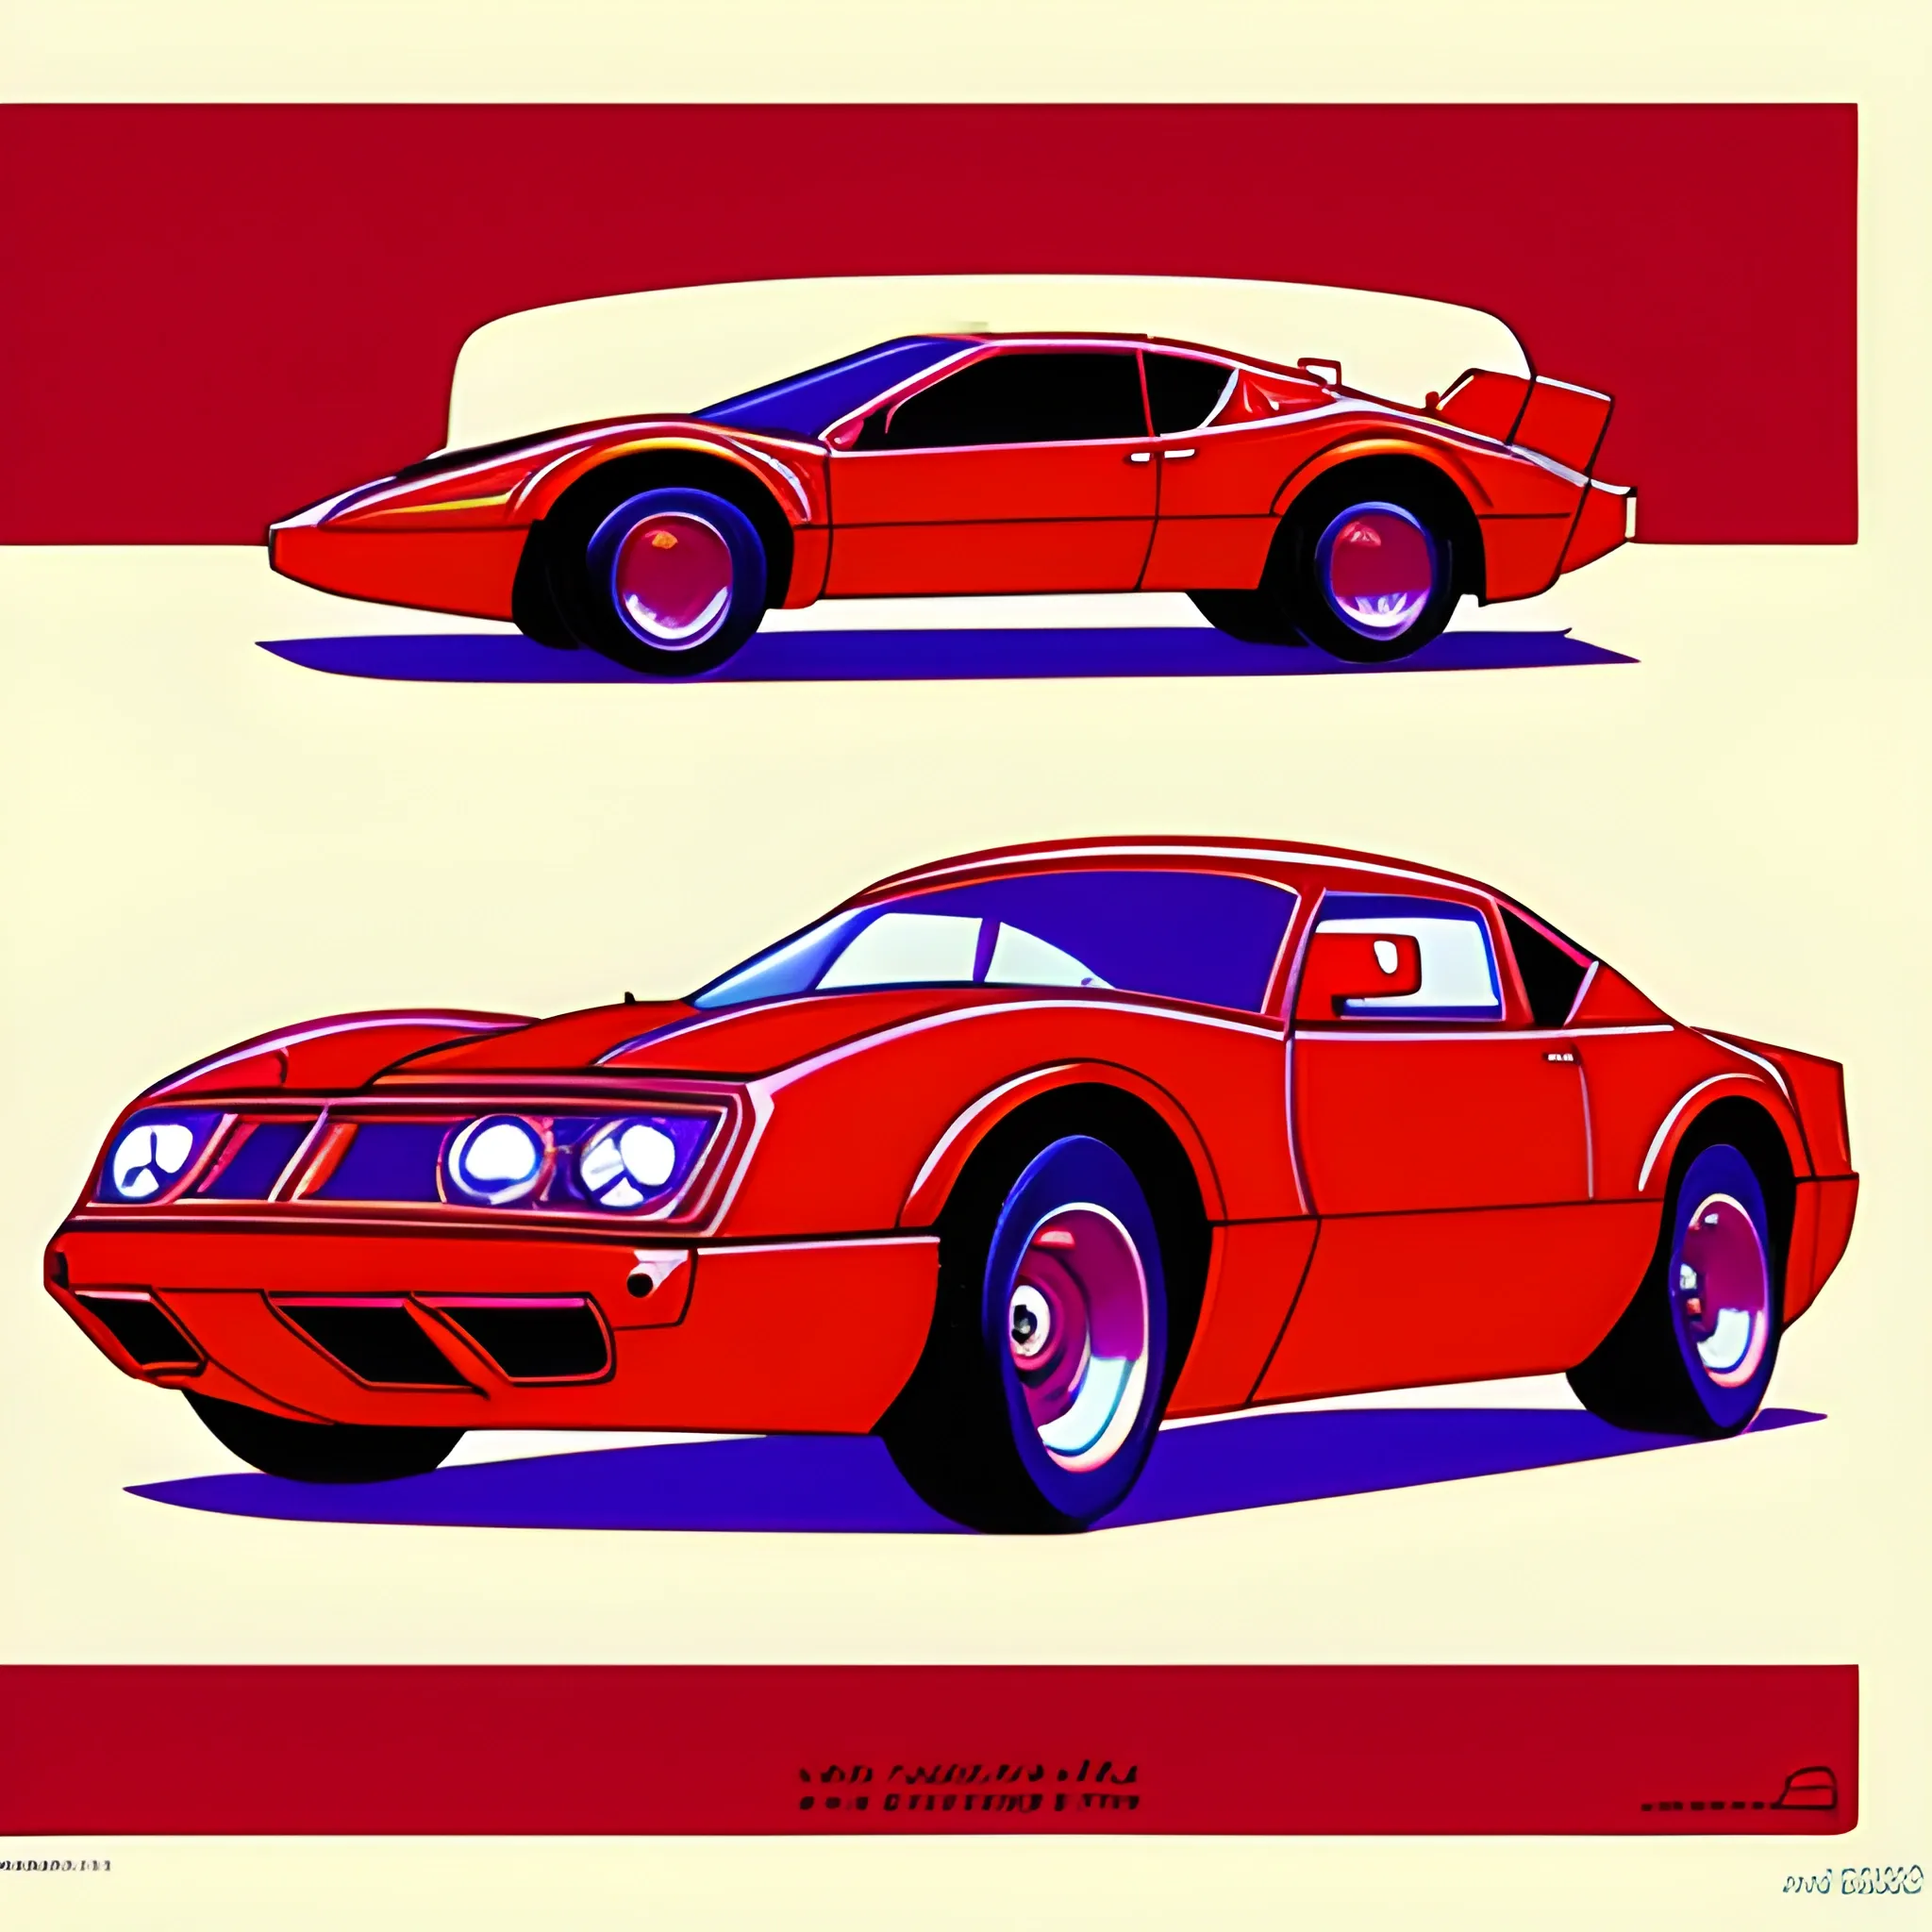 neo retro car, red, drawn in Jean Giraud's art style, full view
